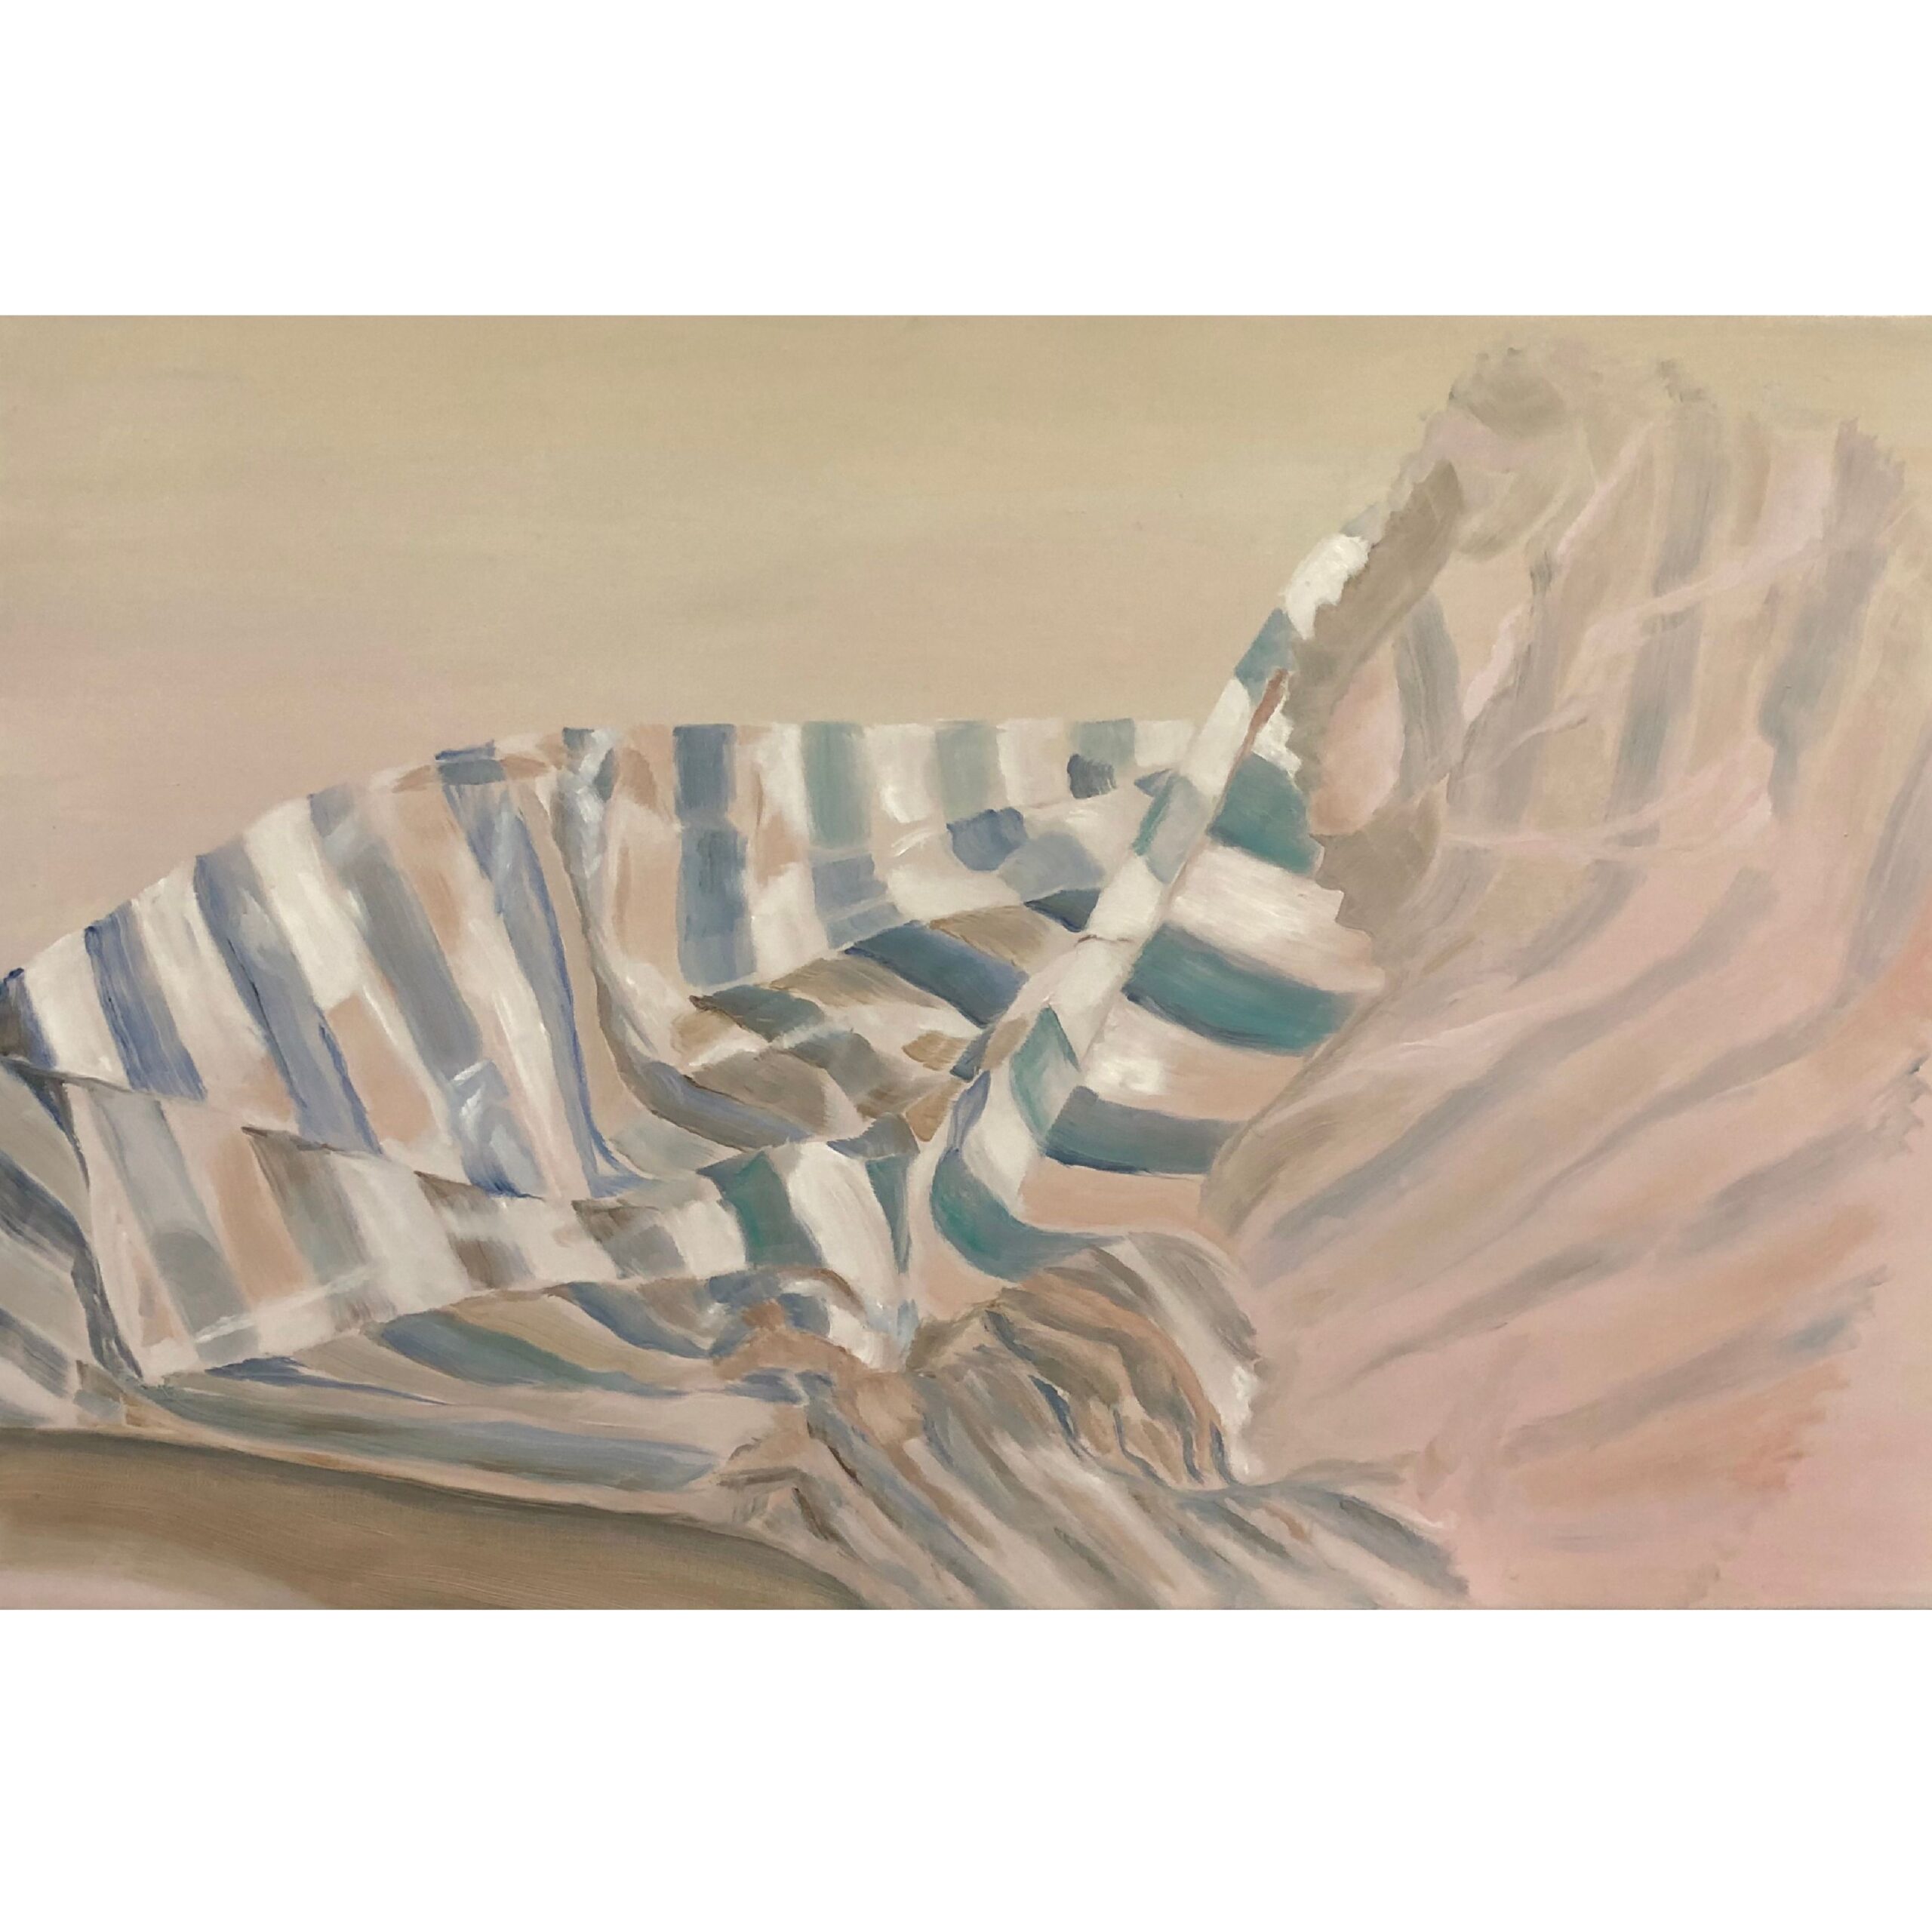 Solitaire, 50x75, oil on canvas, Brit Windahl 2018